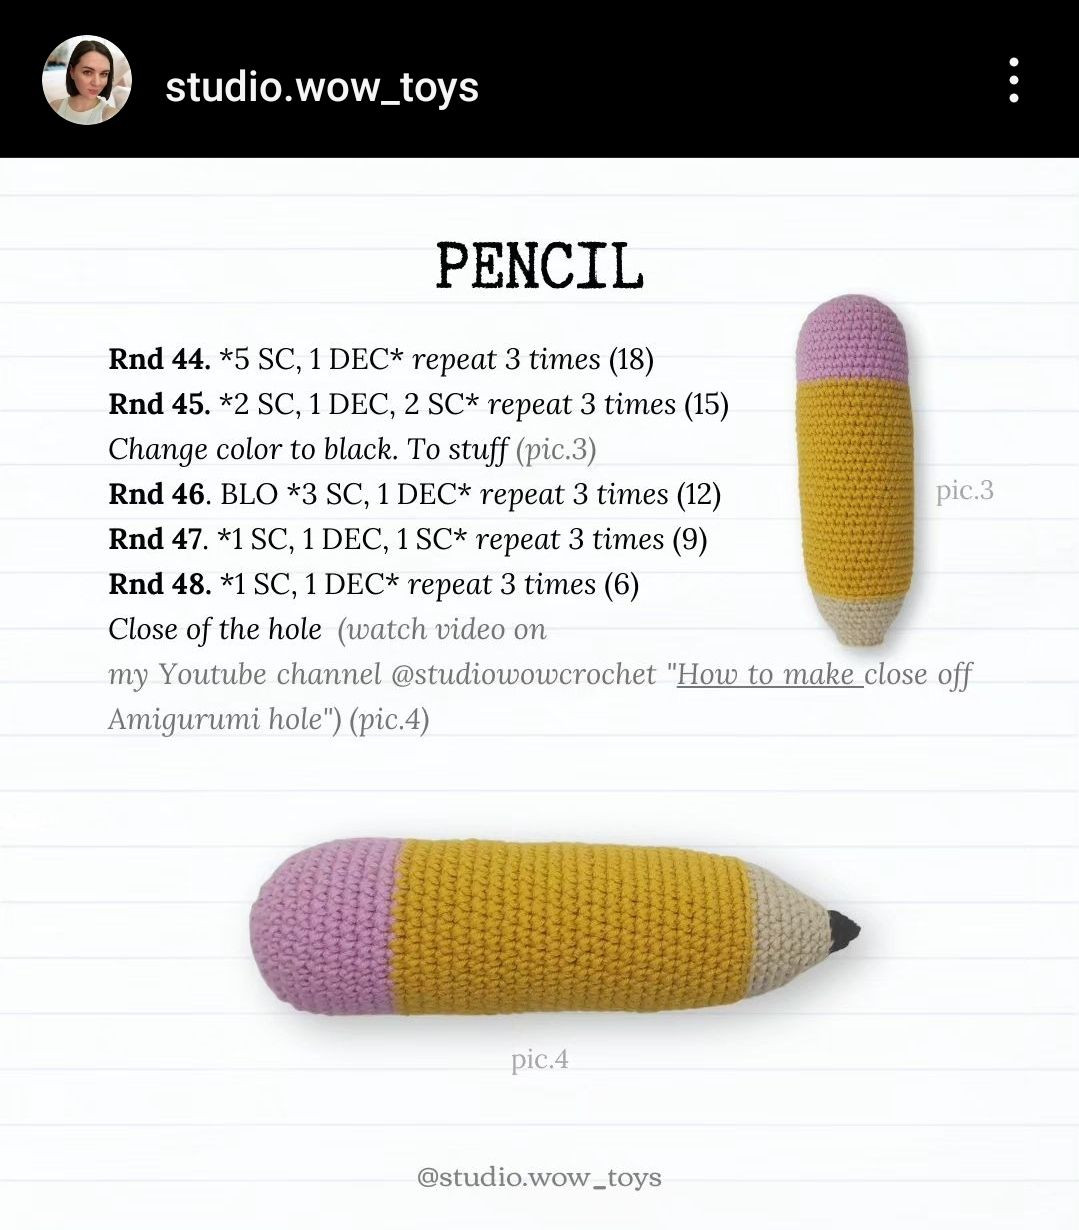 free pattern crazy pencil